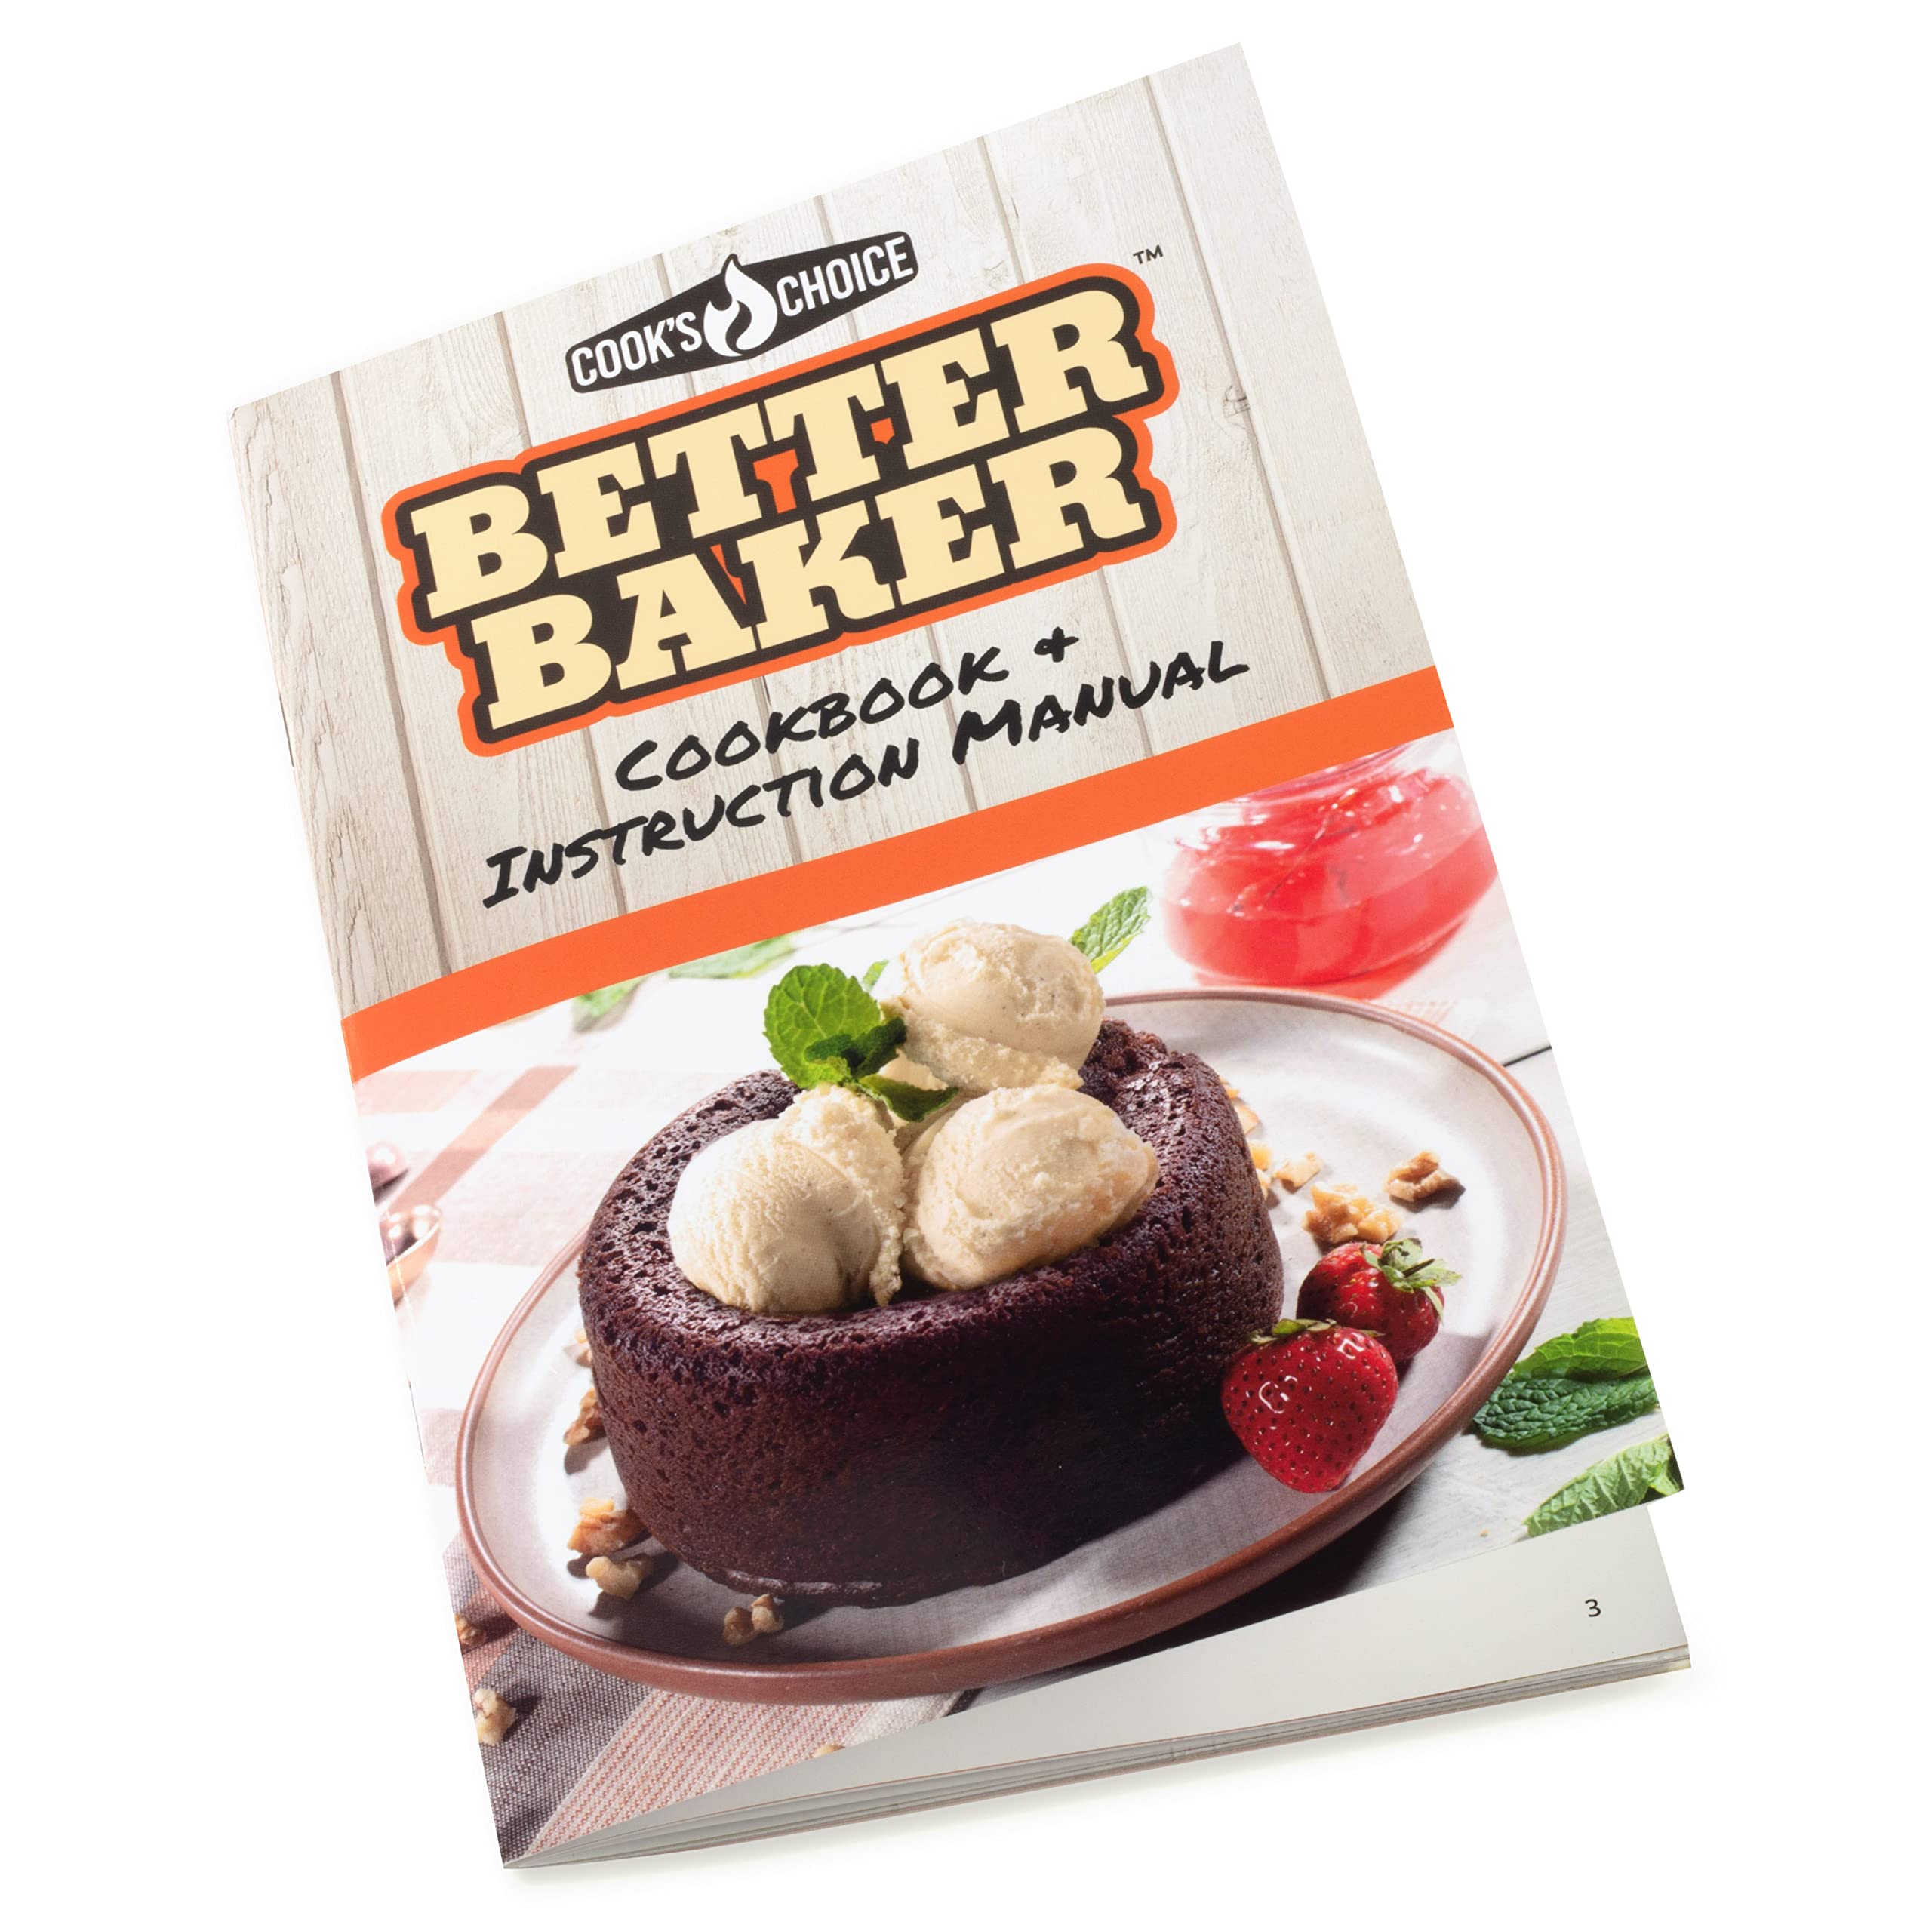 Cook's Choice Better Baker Edible Food Bowl Maker- Bake six 3